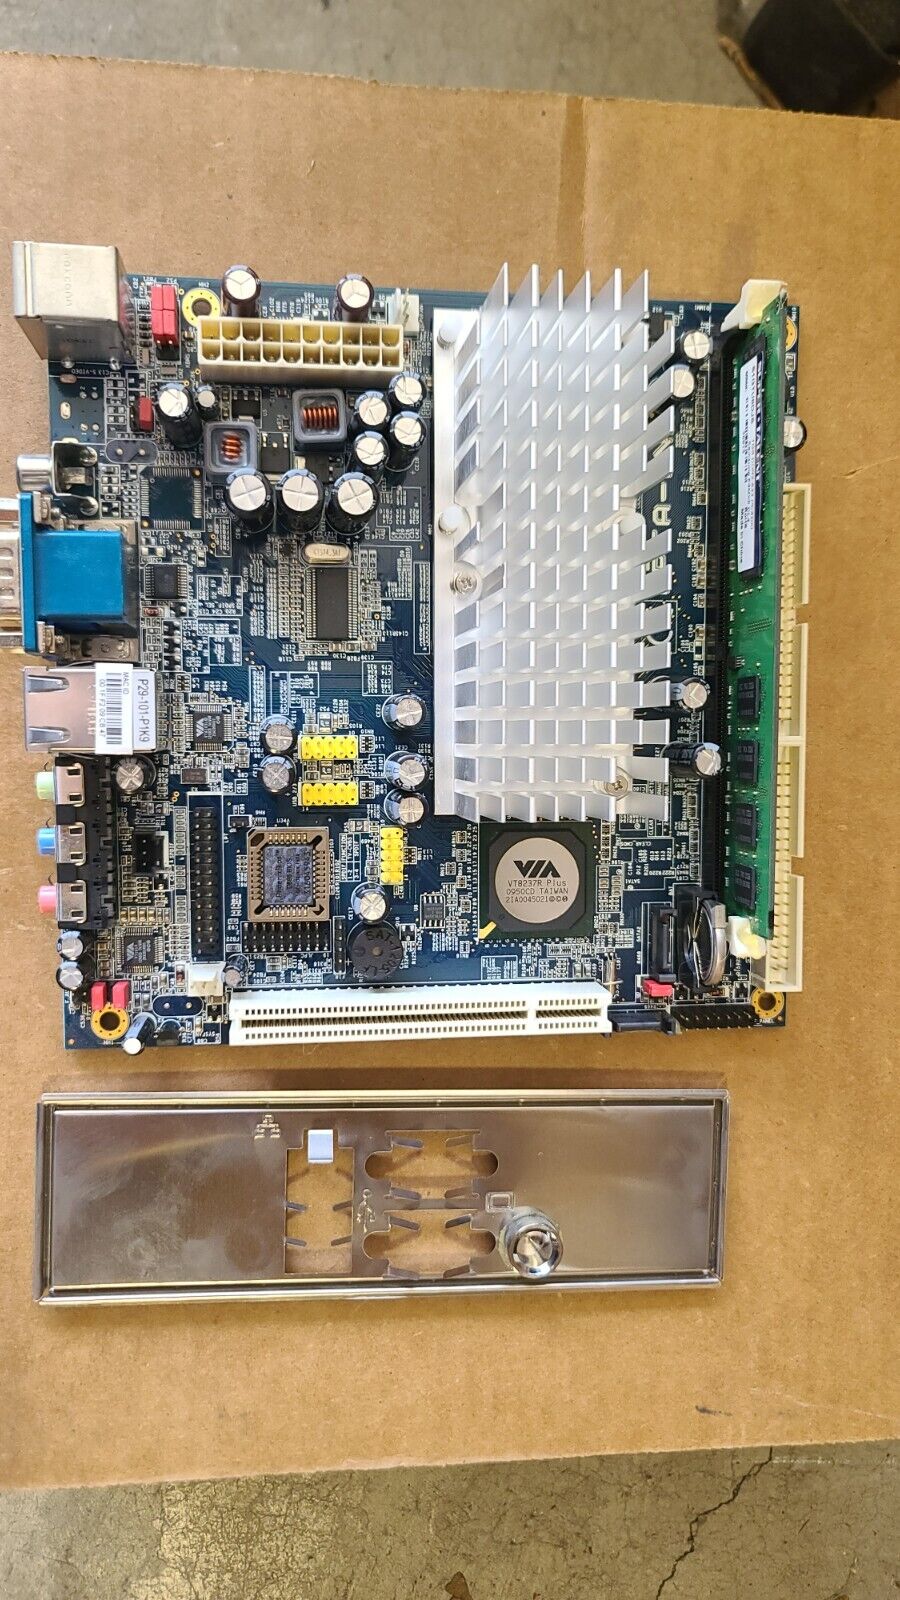 VIA EPIA-LN10000EAG Mini-ITX Motherboard w/ 1GB RAM, I/O Shield.